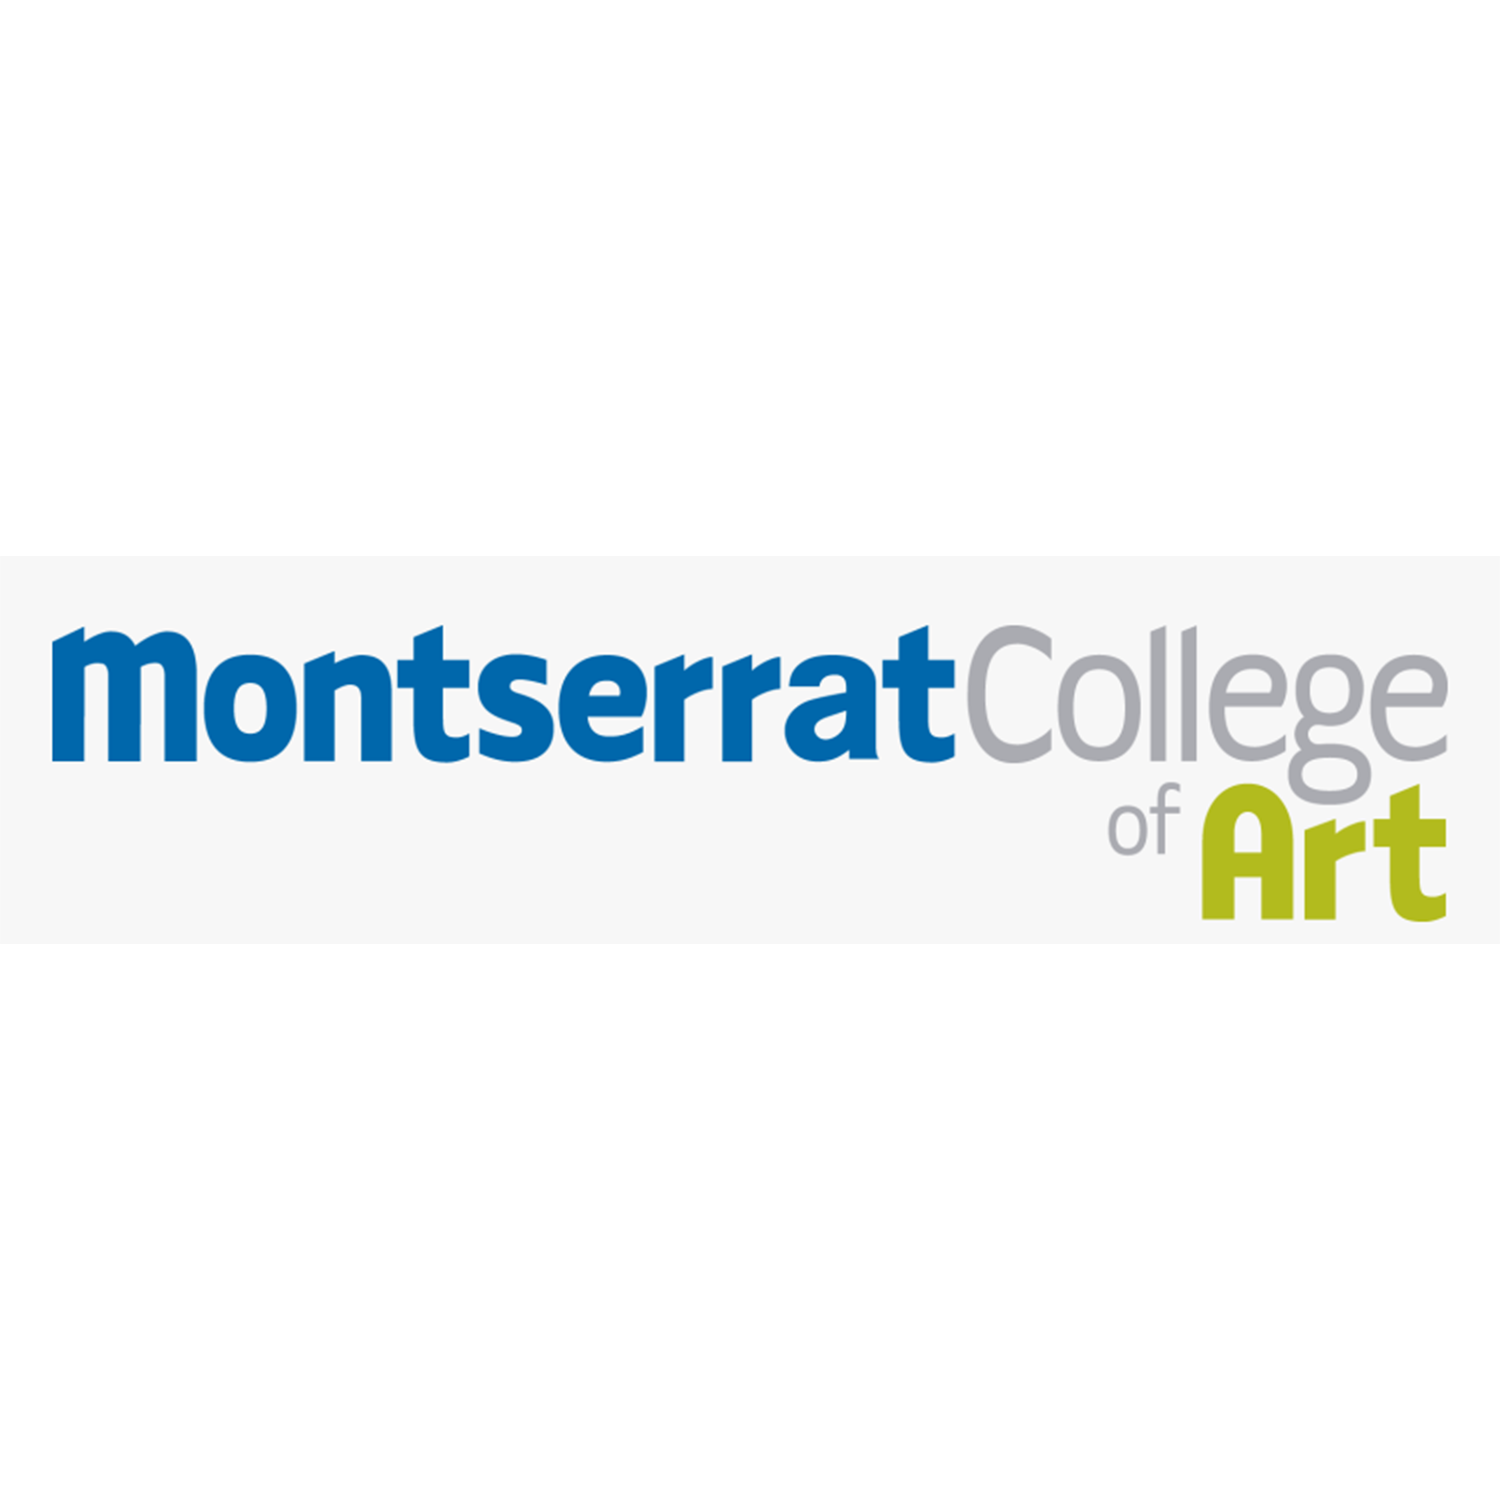 Montserrat college of art